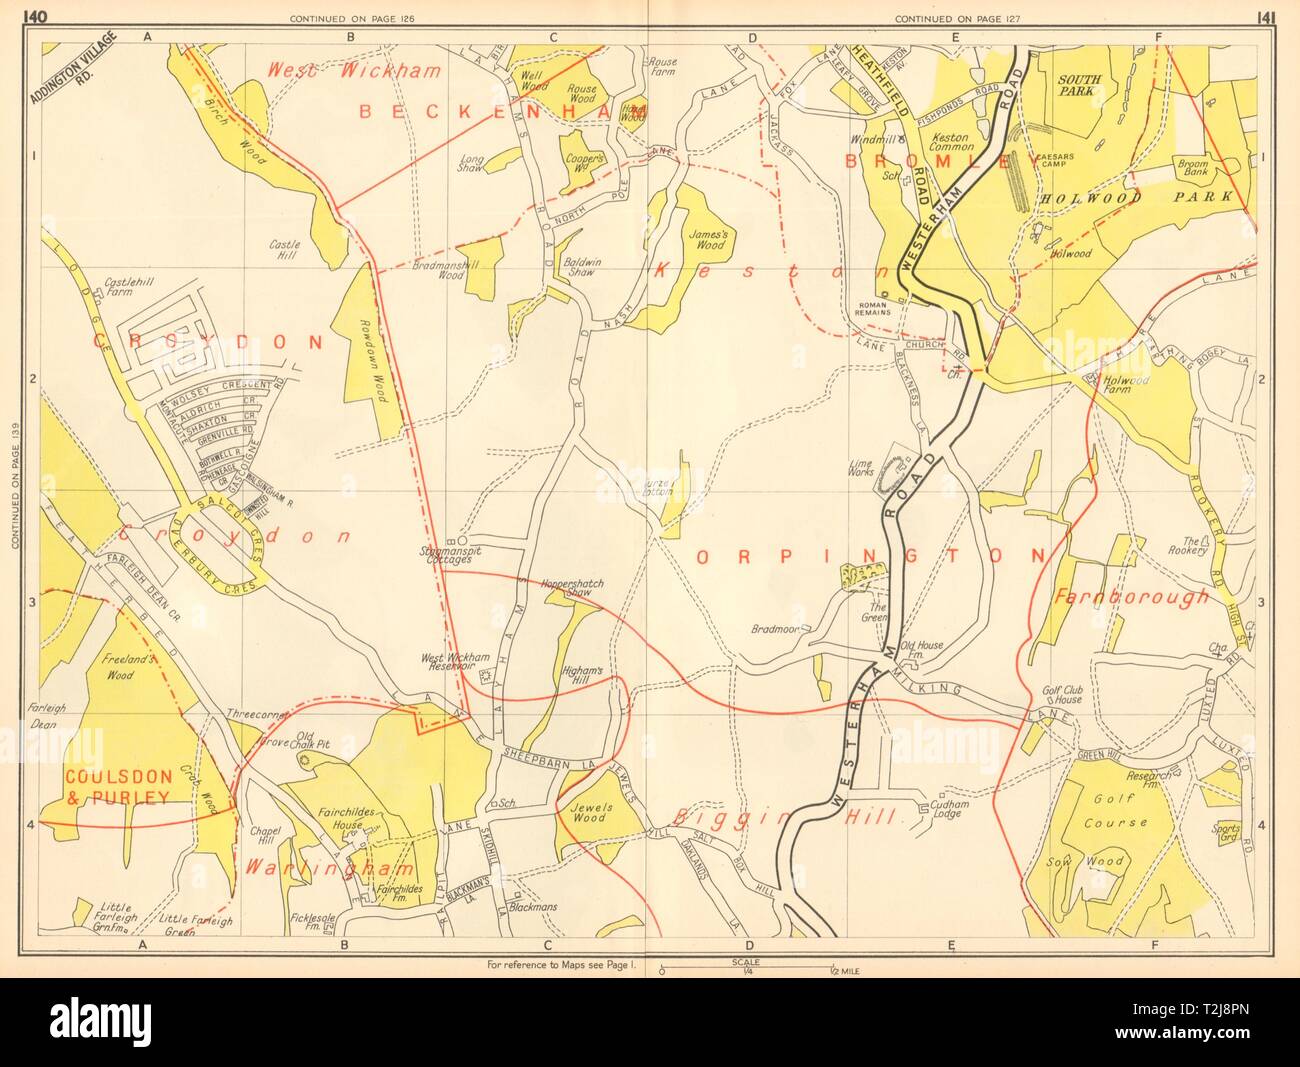 Neue ADDINGTON Biggin Hill Holwood Park Farnborough. Geographen "A-Z" 1948 Karte Stockfoto